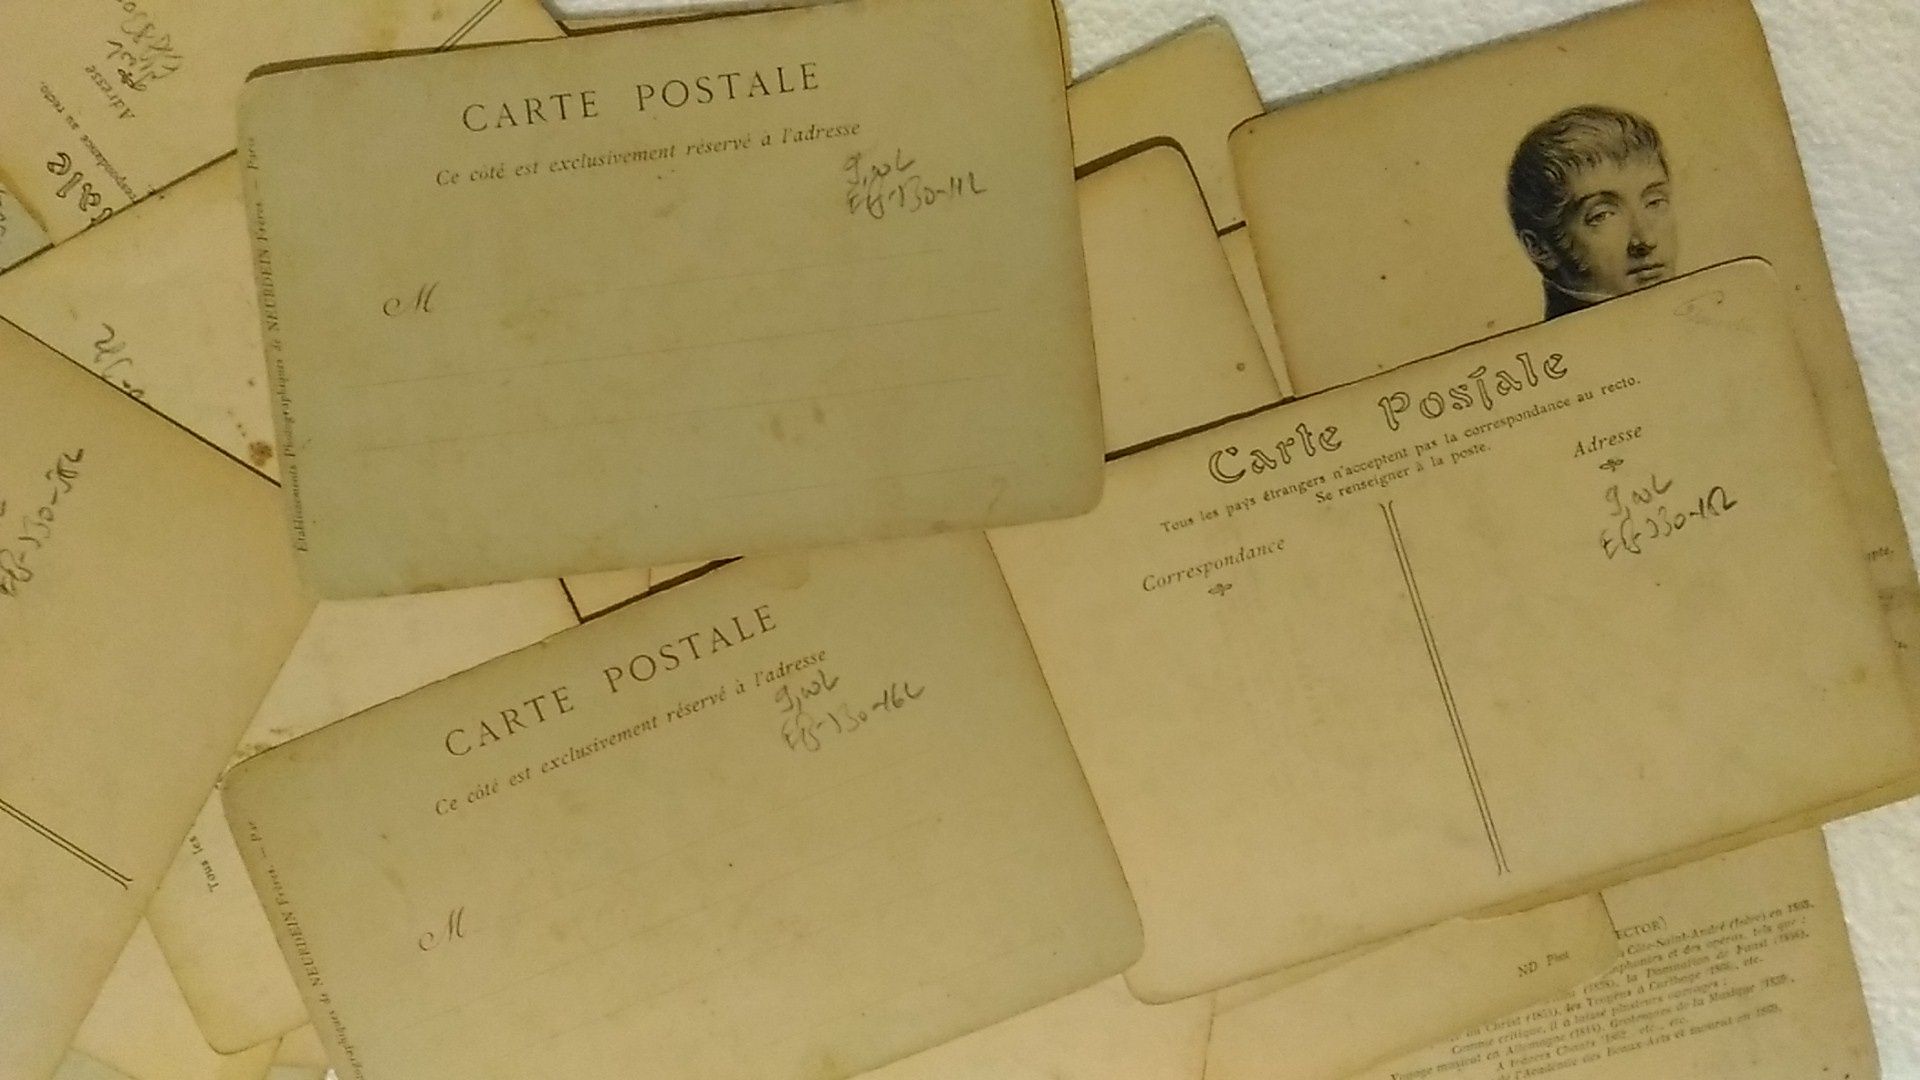 Carti postale set. Ani 1903-1907